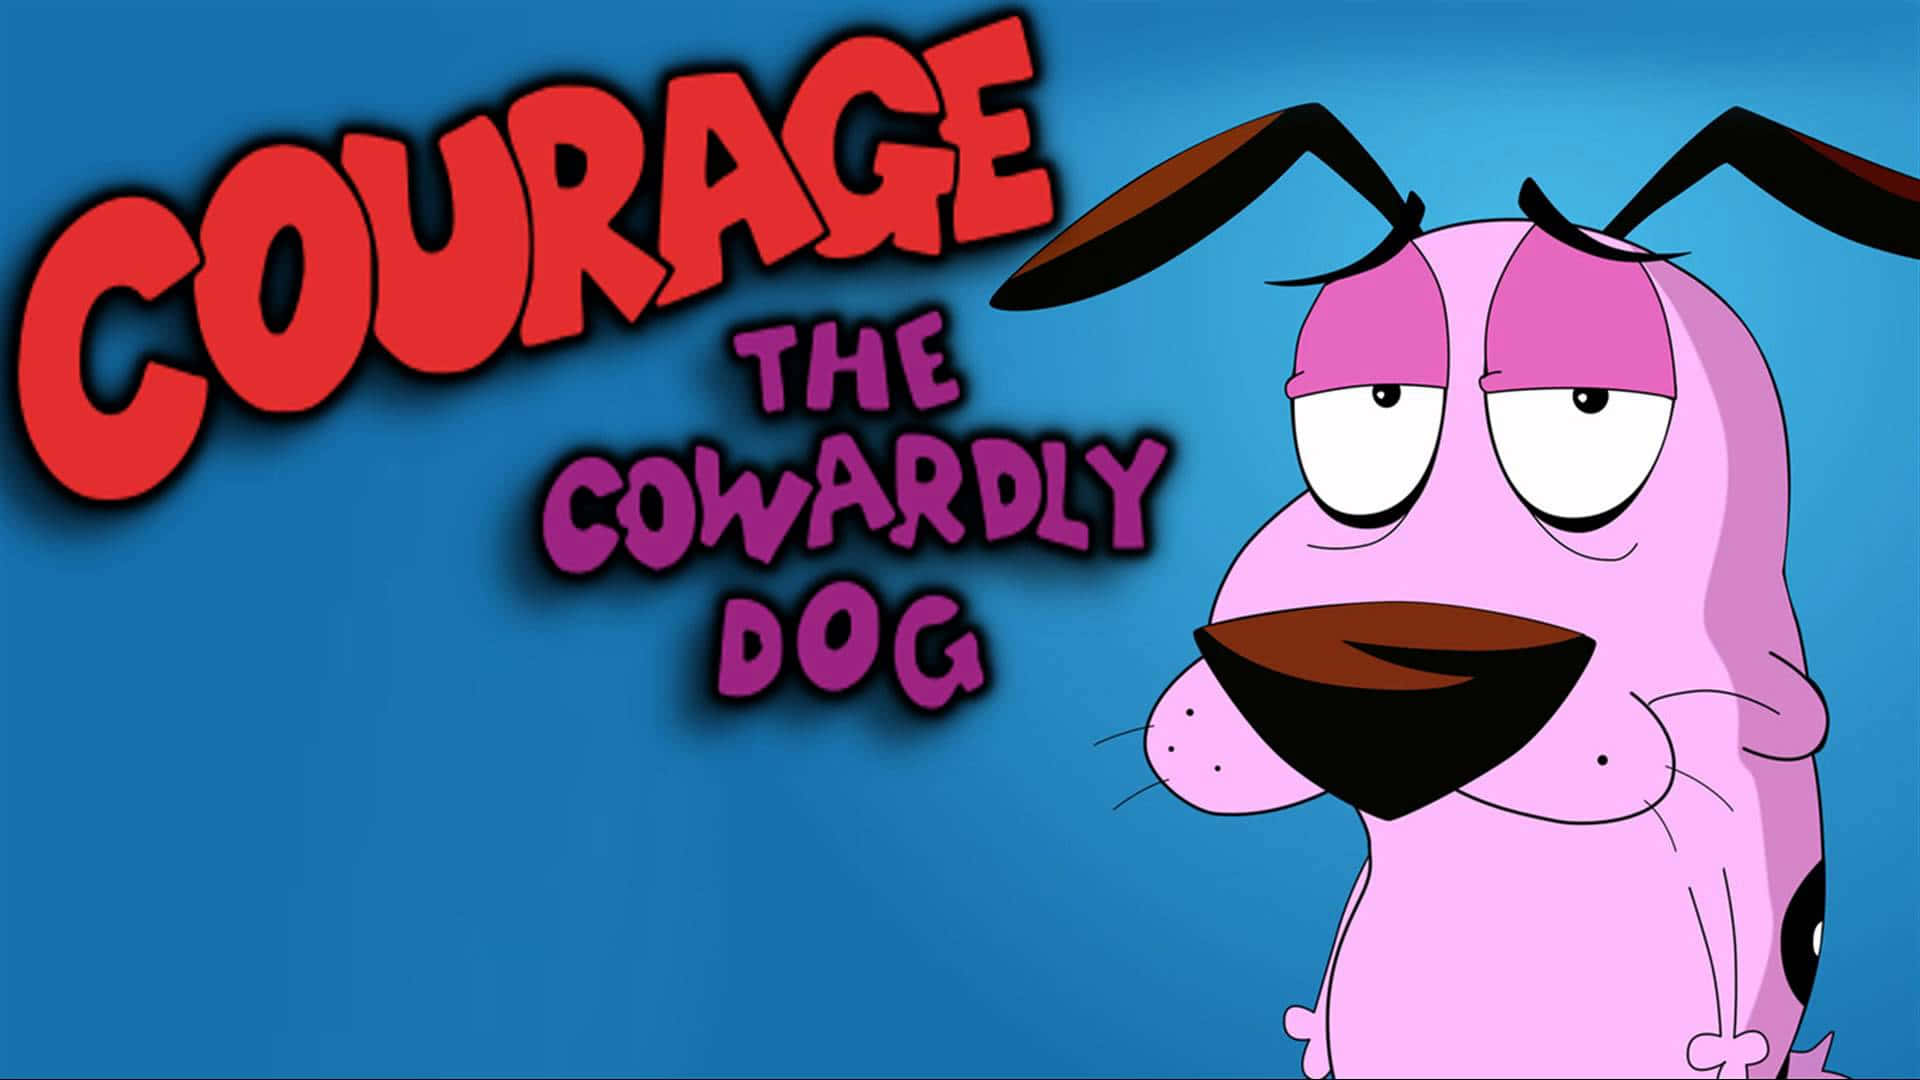 Everyone's Favorite Cartoon Dog, Courage!